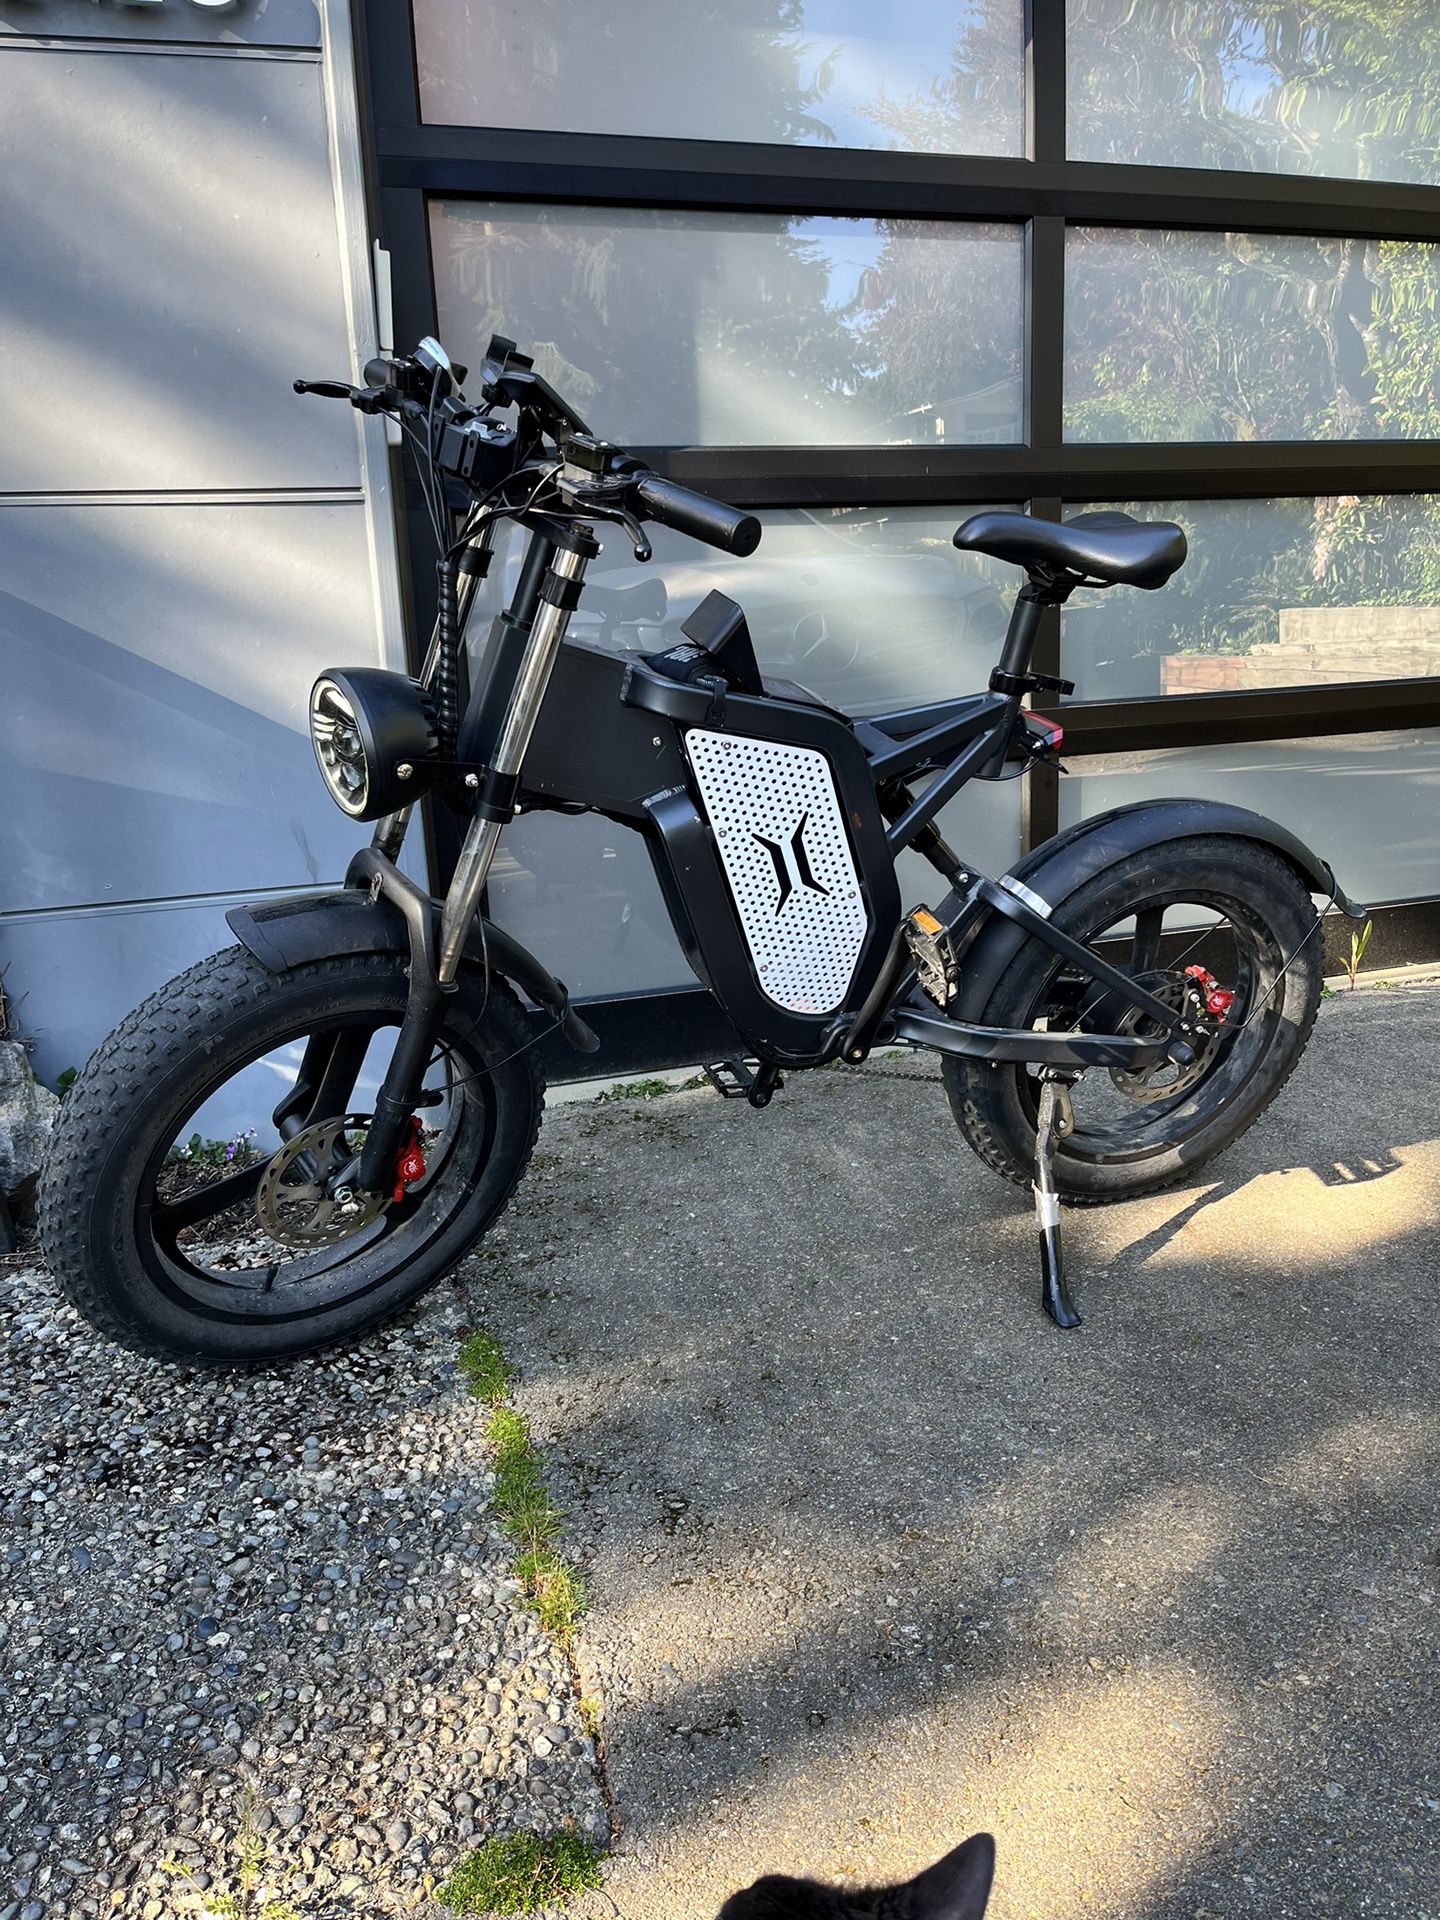  E-bike With Big Battery